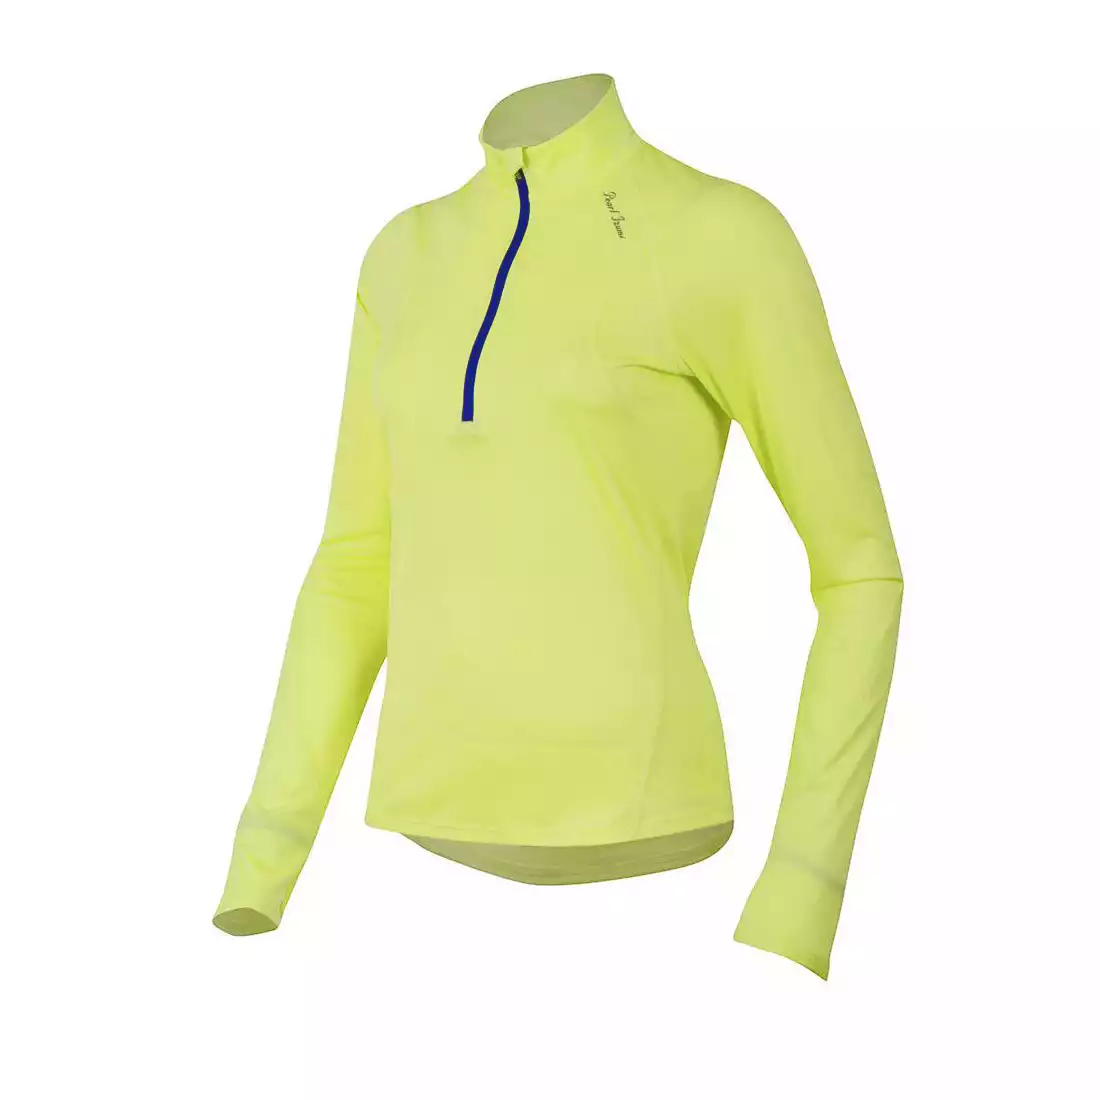 PEARL IZUMI - 12221403-4DA FLY LS - damska koszulka do biegania d/r, kolor: Żółty